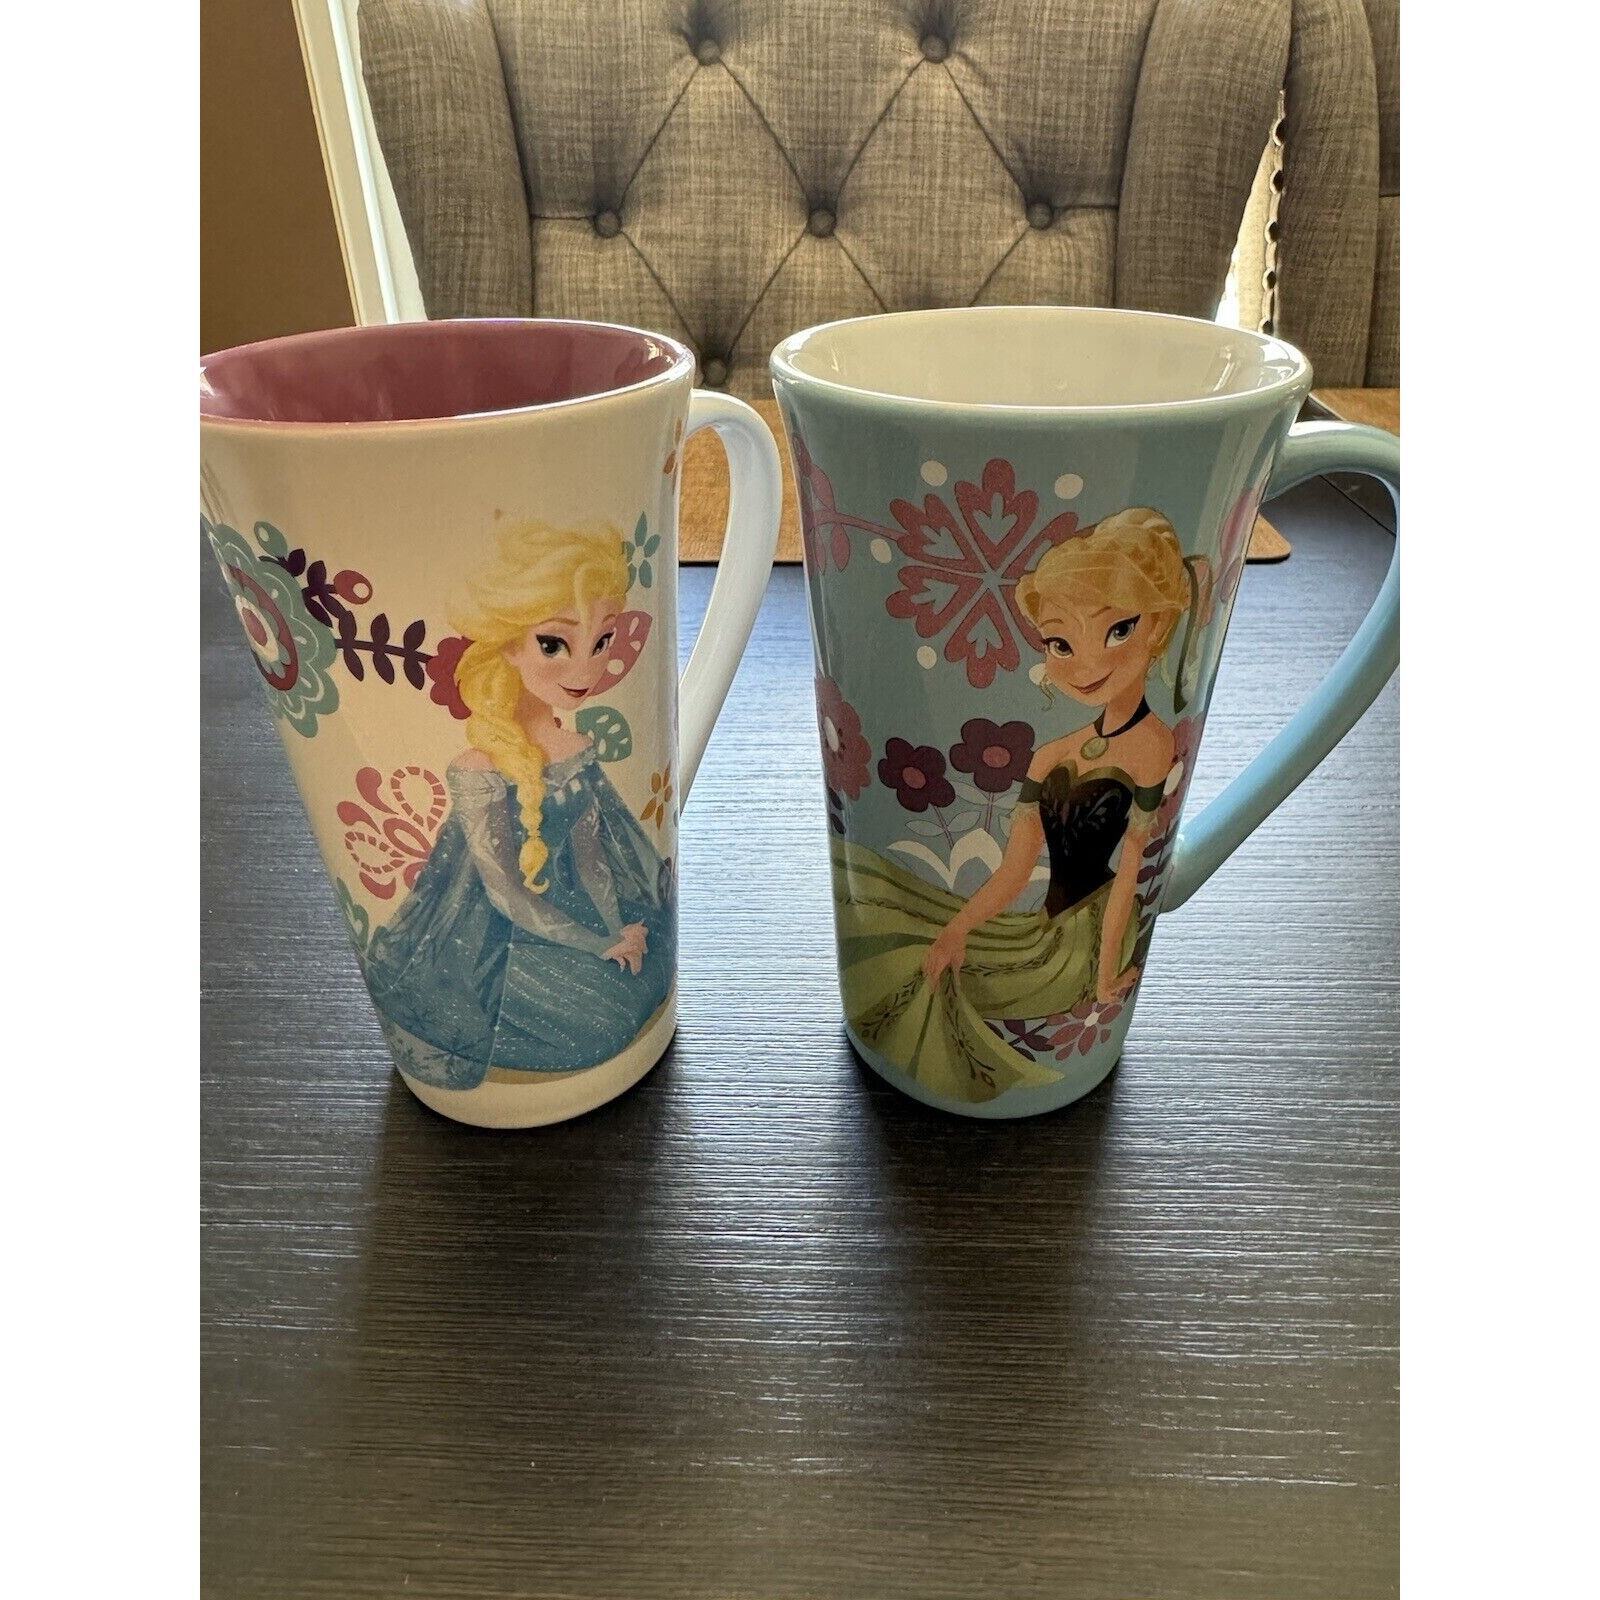 Disney Elsa and Anna raised glitter floral mugs